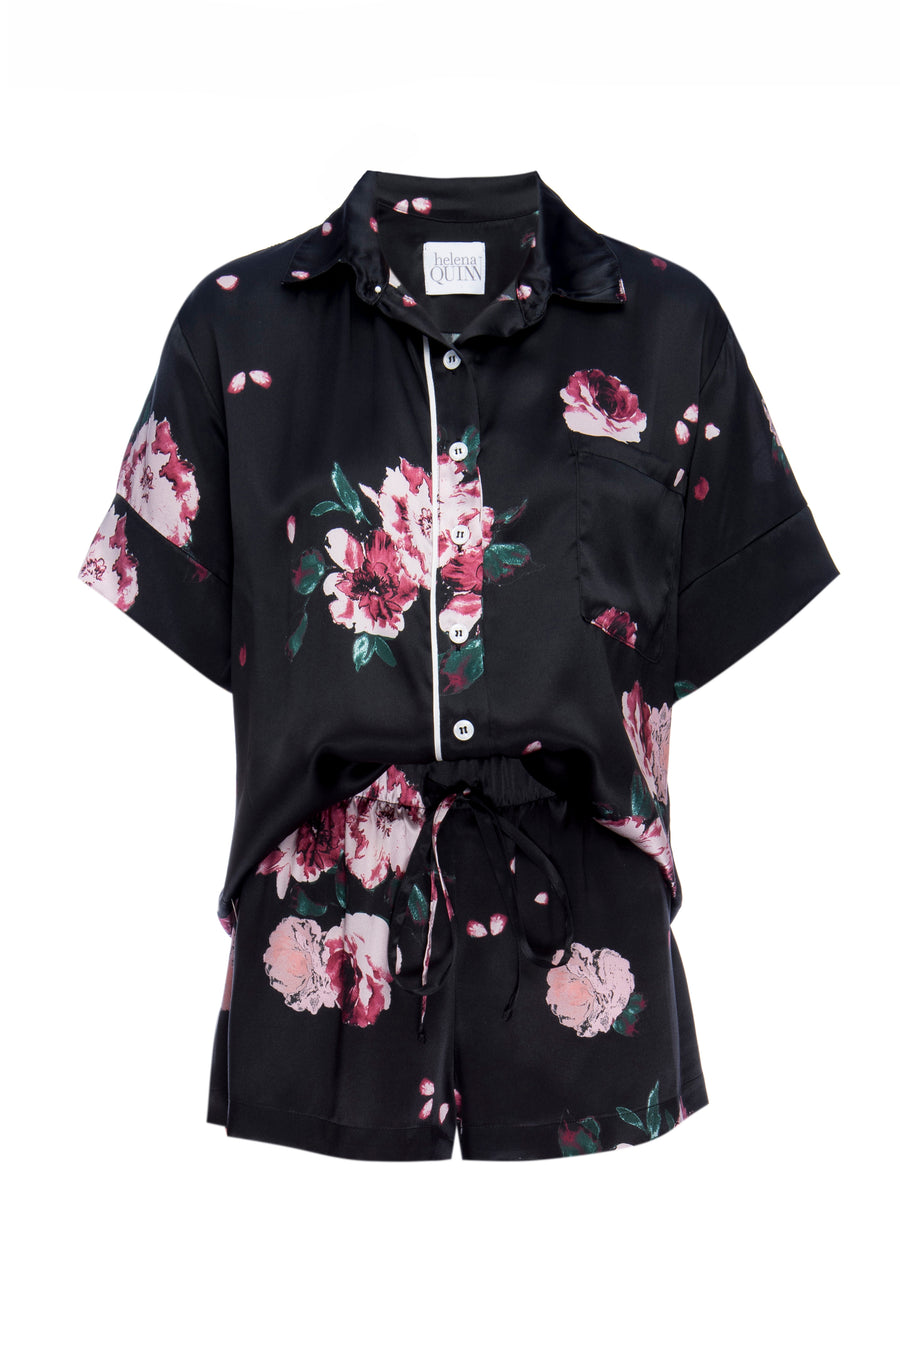 Silk Charmeuse Short Sleeved PJ Top + Short Set: Black Rose Print